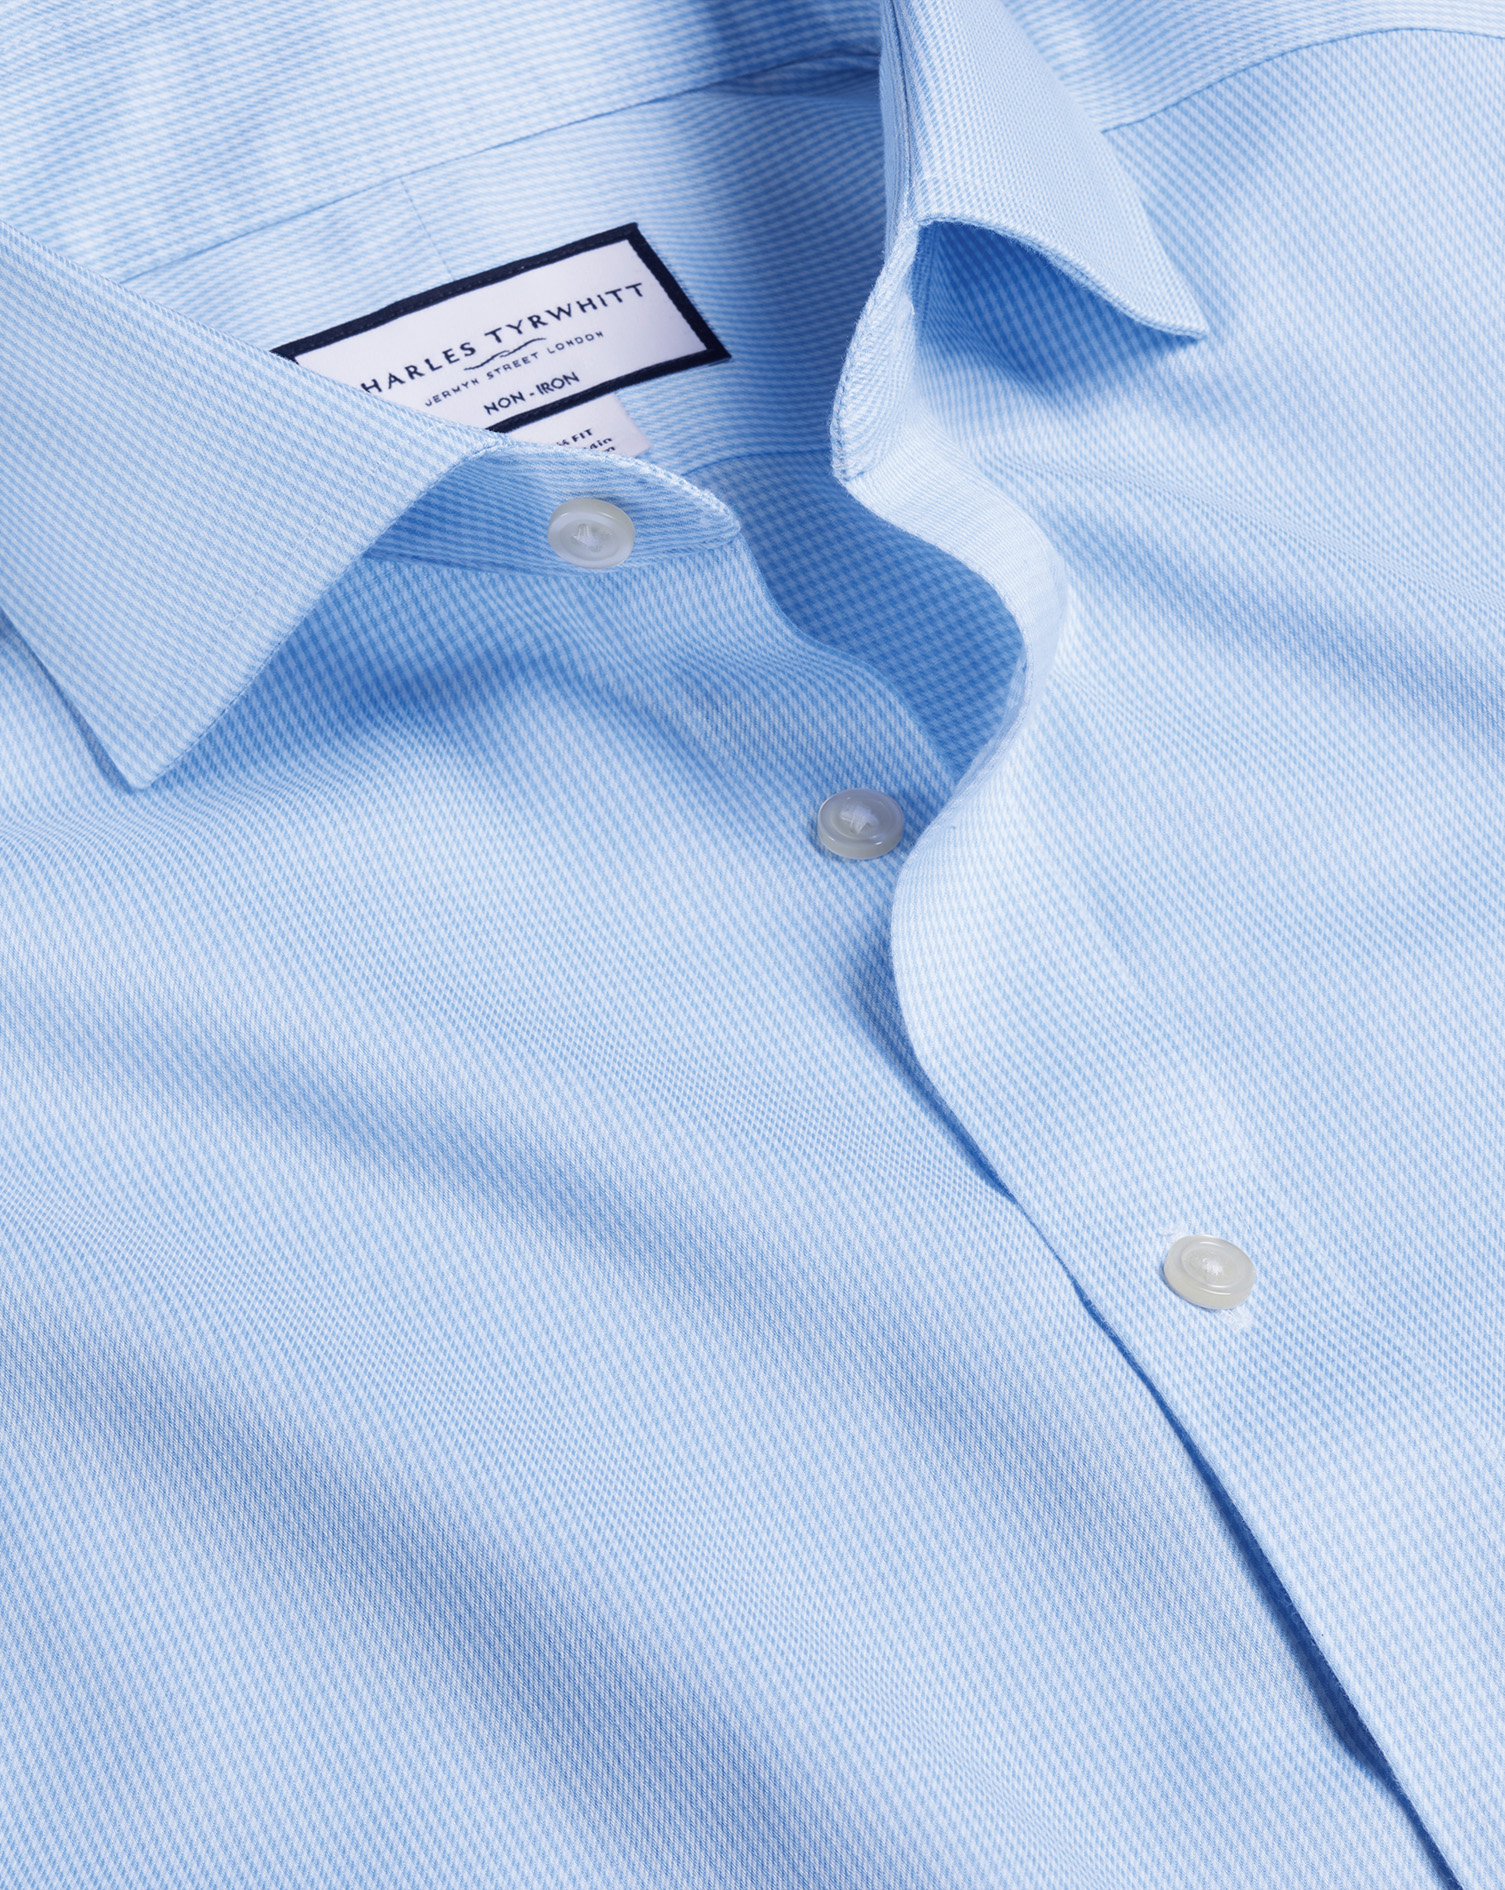 Men's Charles Tyrwhitt Cutaway Collar Non-Iron Puppytooth Dress Shirt - Sky Blue French Cuff Size La